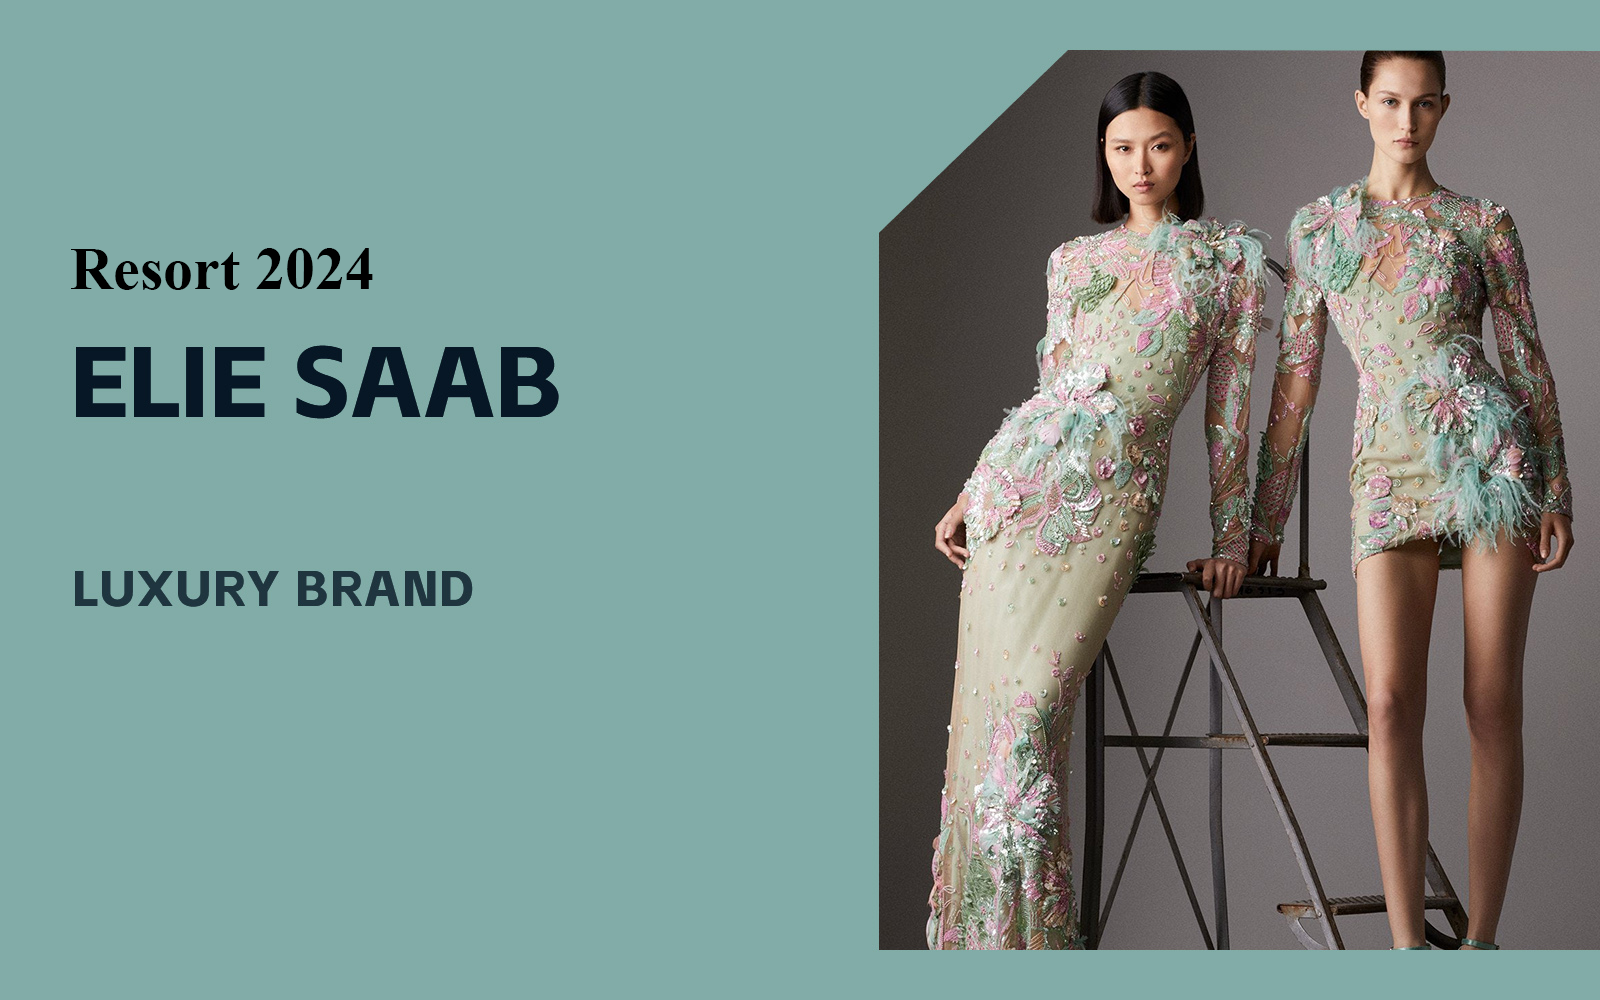 Smart and Elegant -- The Analysis of Elie Saab The Luxury Wedding Dress Brand